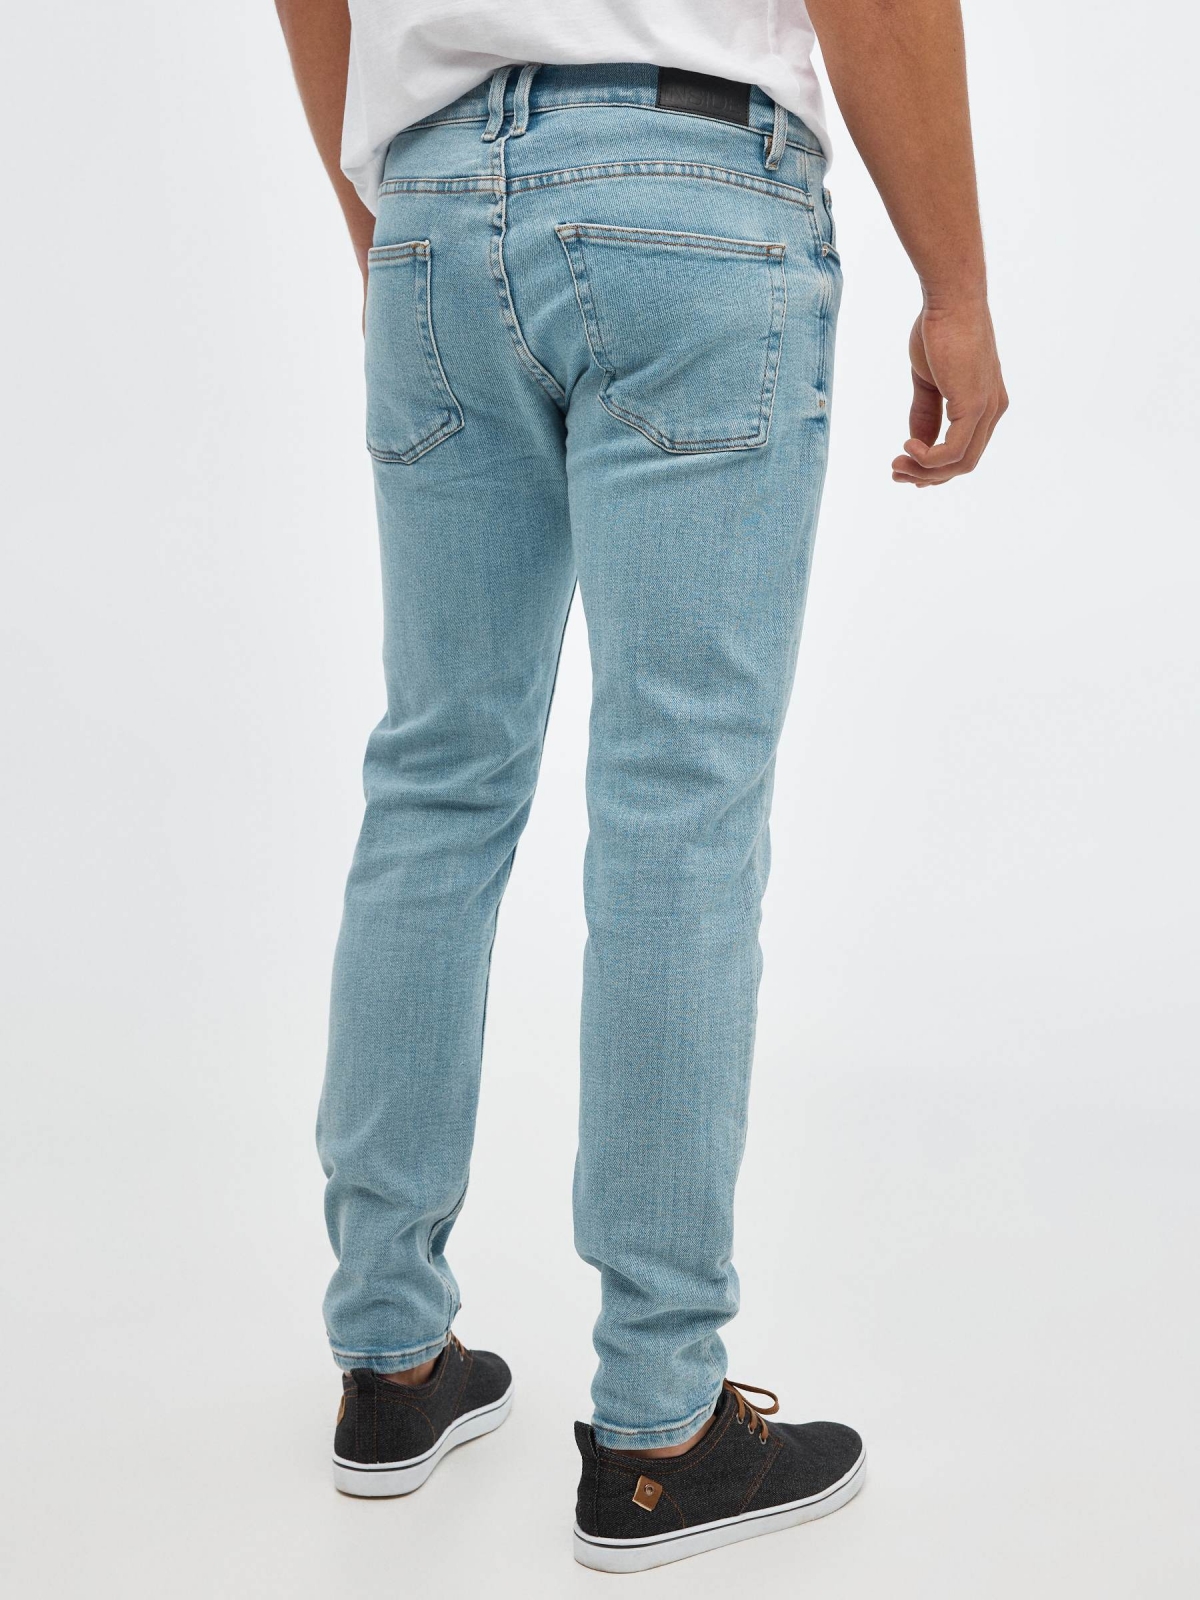 Jeans Slim azul claro azul vista media trasera